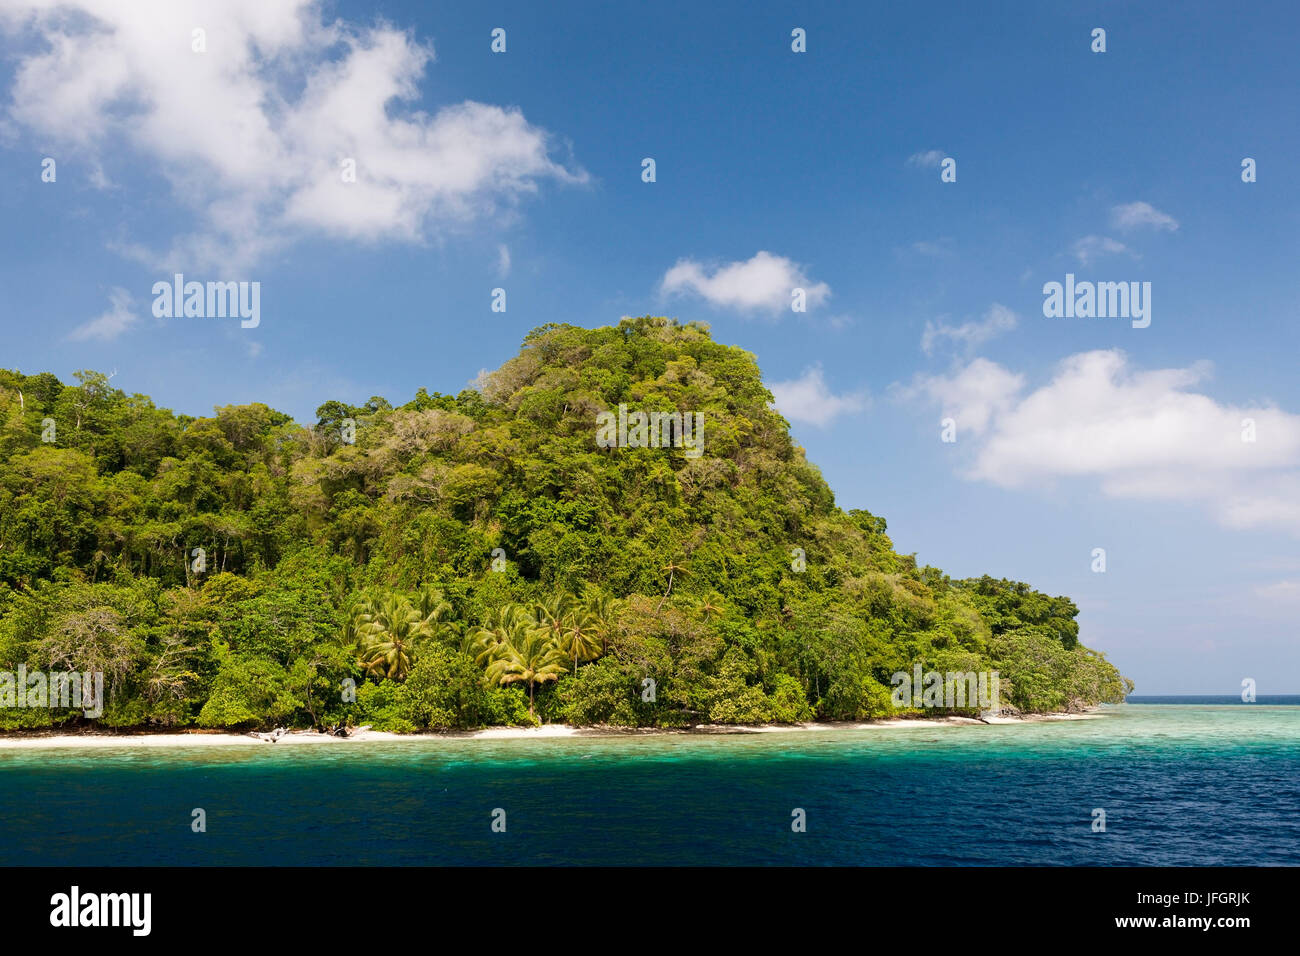 Tropical island, Florida Islands, the Solomon Islands Stock Photo